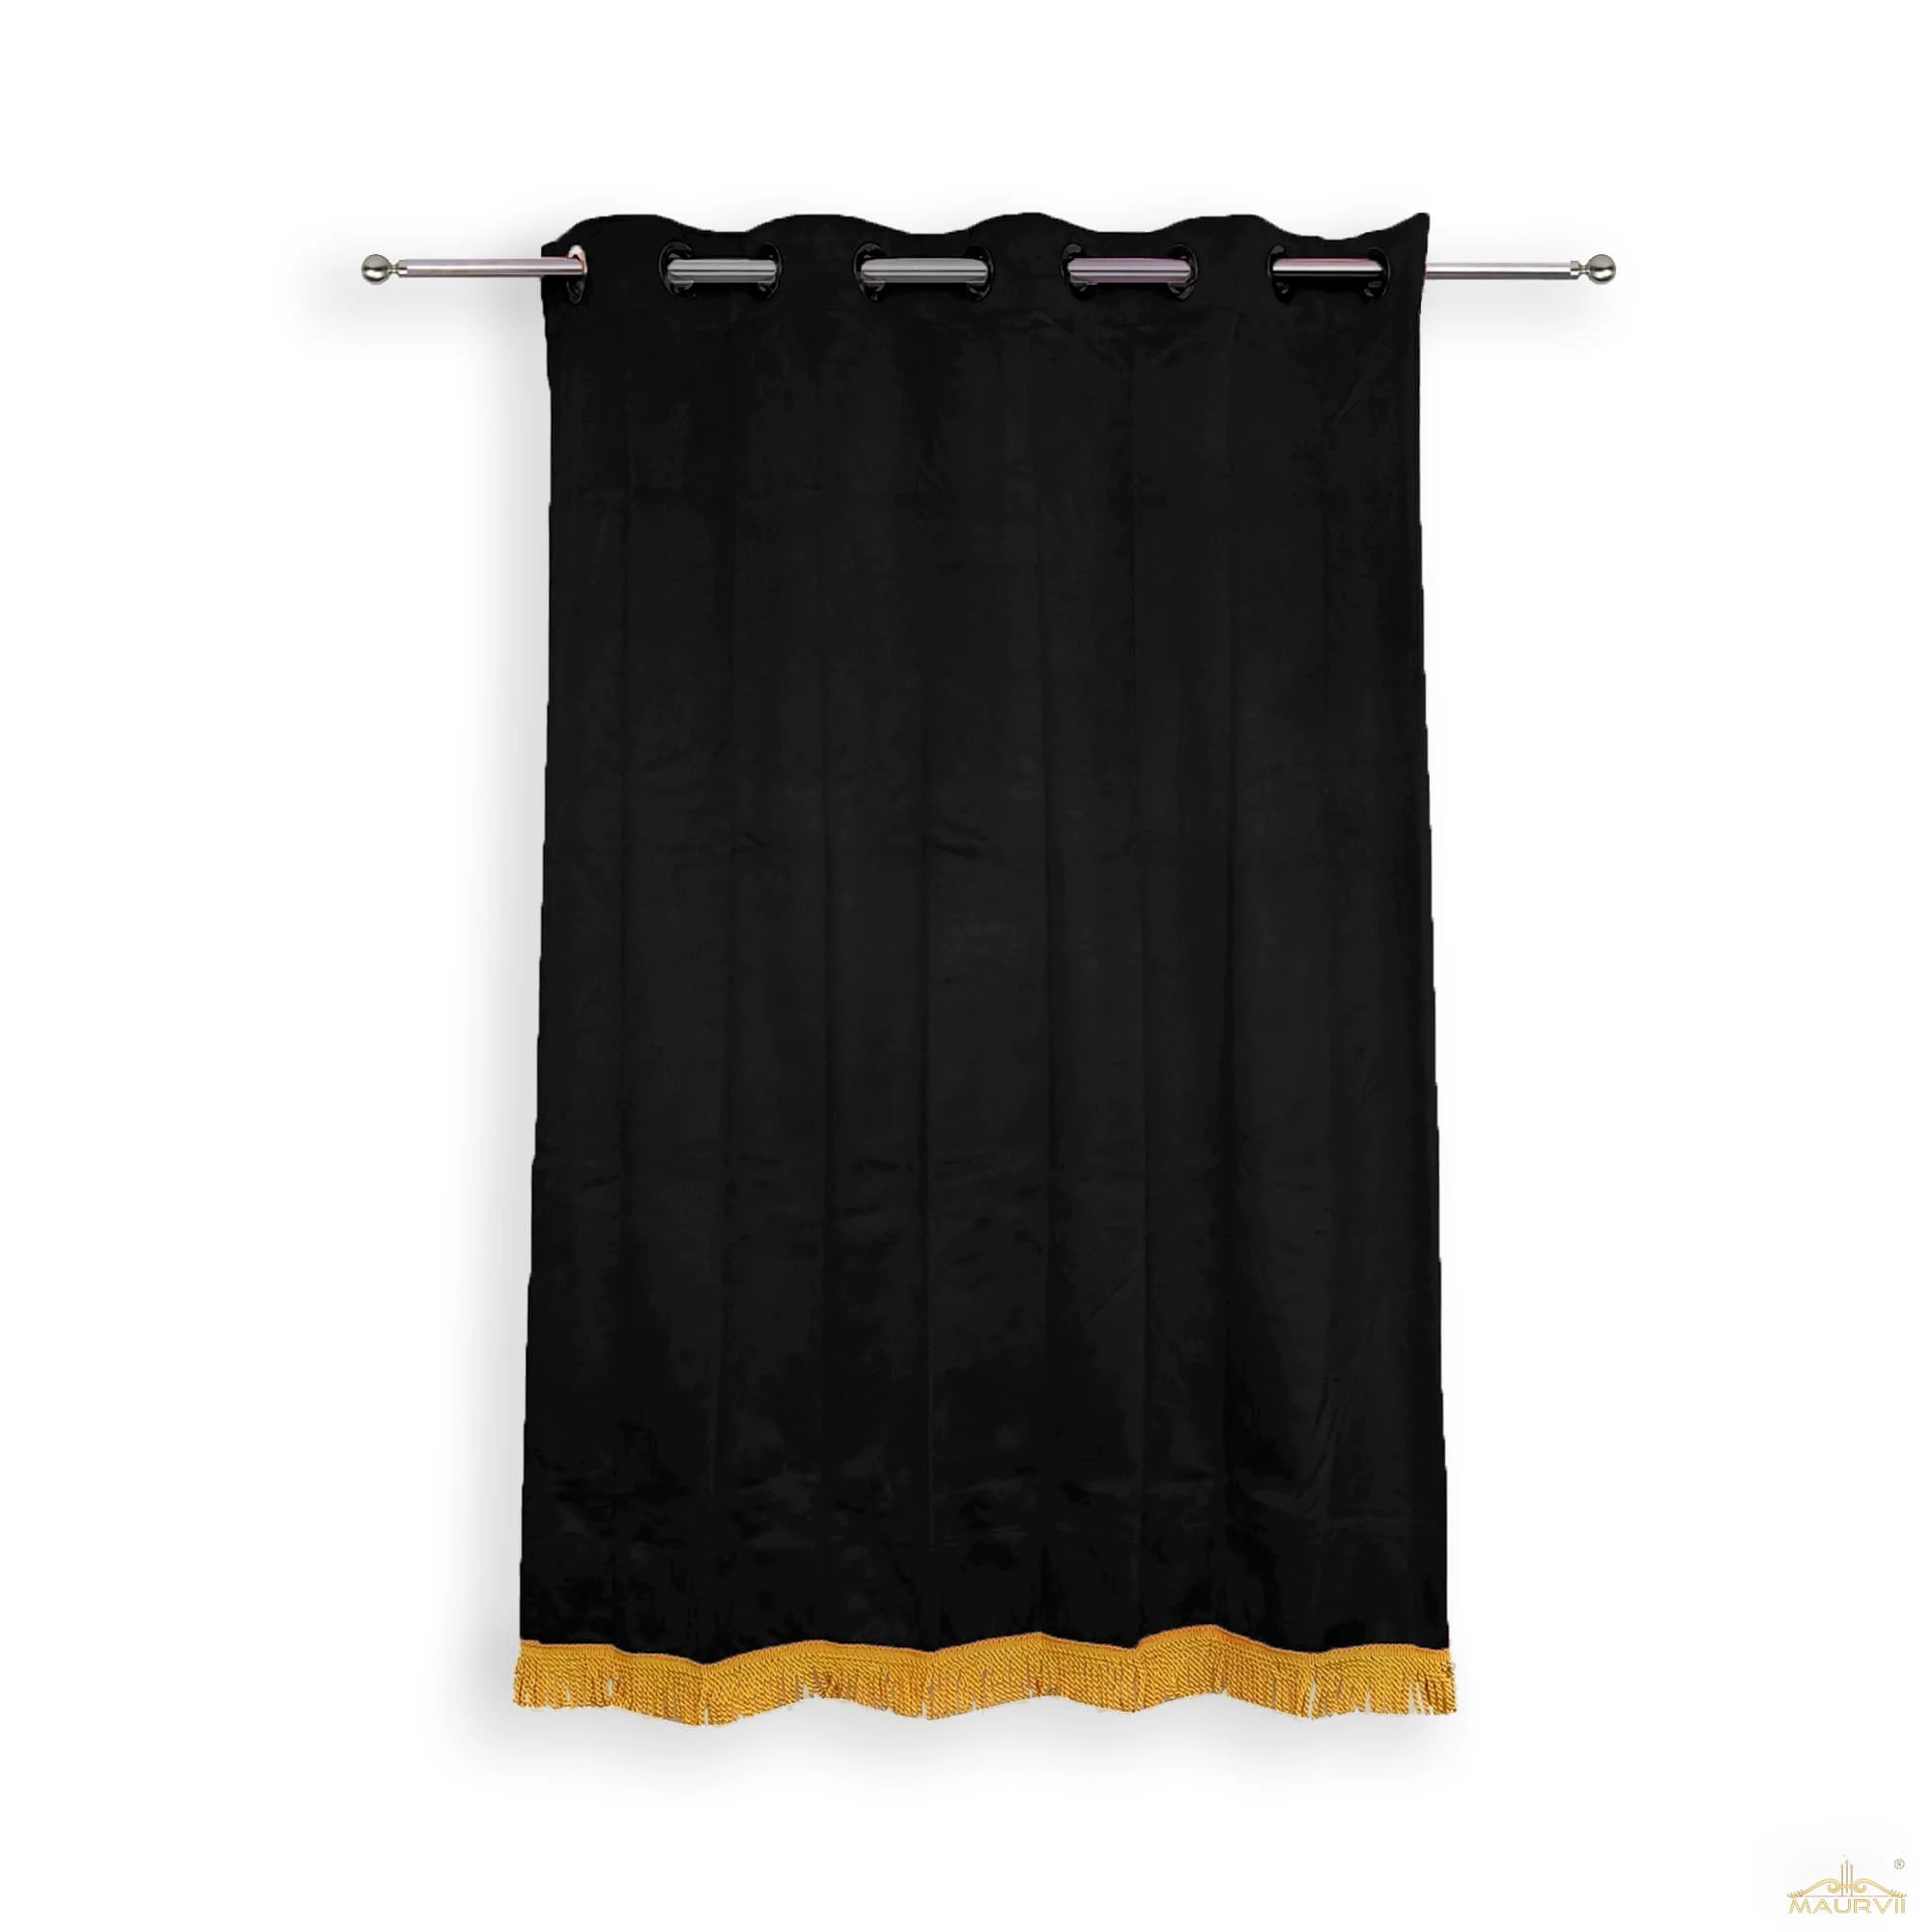 Black color velvet curtains with fringe